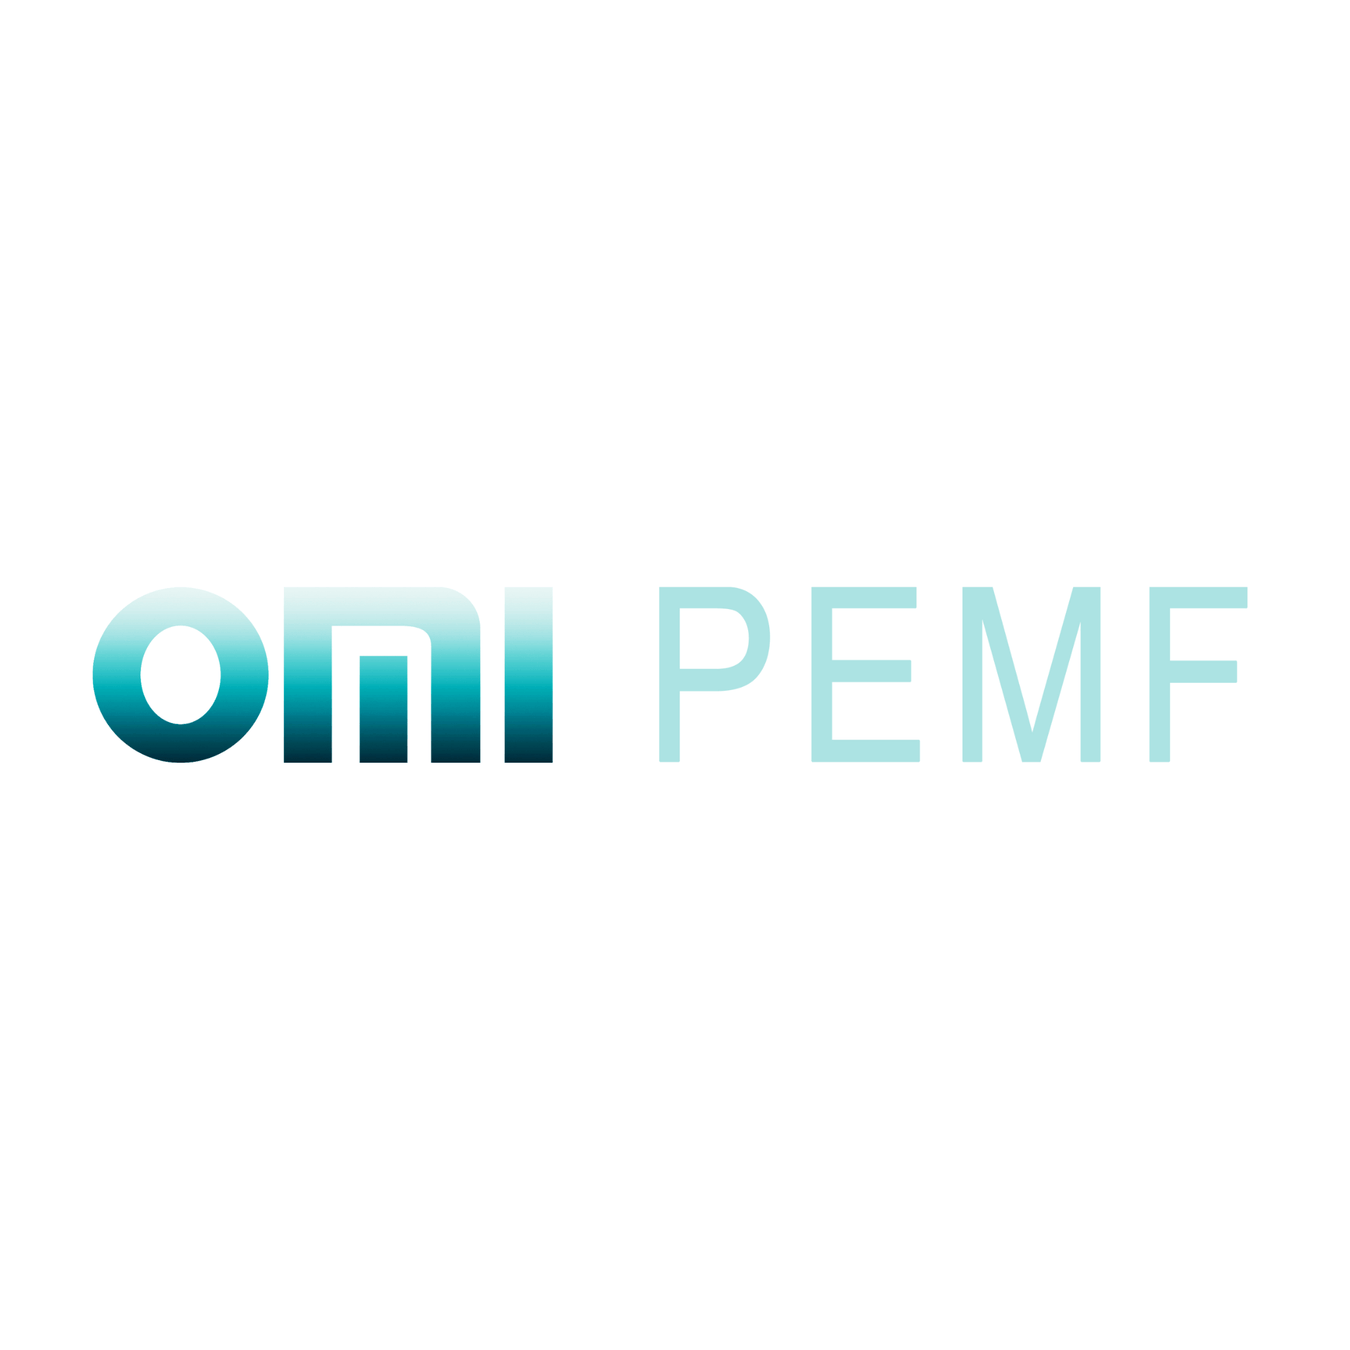 OMI PEMF logo - The logo looks like a technology brand